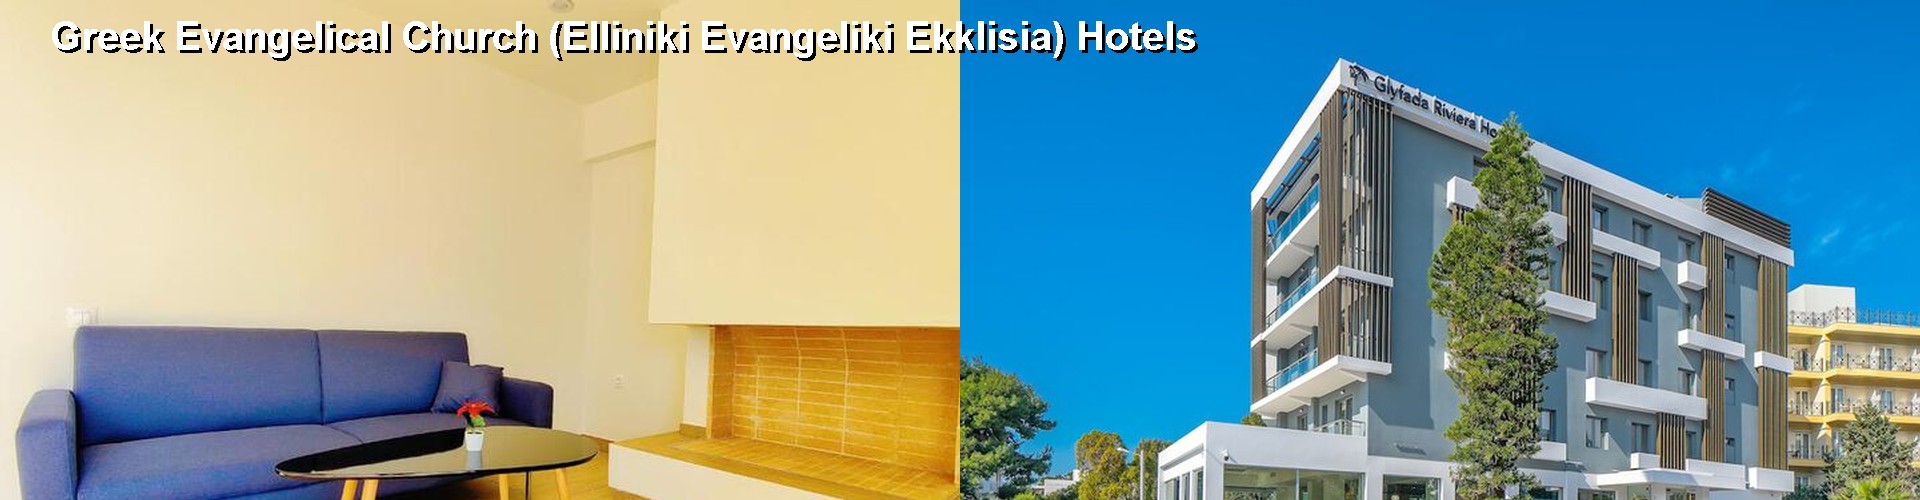 5 Best Hotels near Greek Evangelical Church (Elliniki Evangeliki Ekklisia)